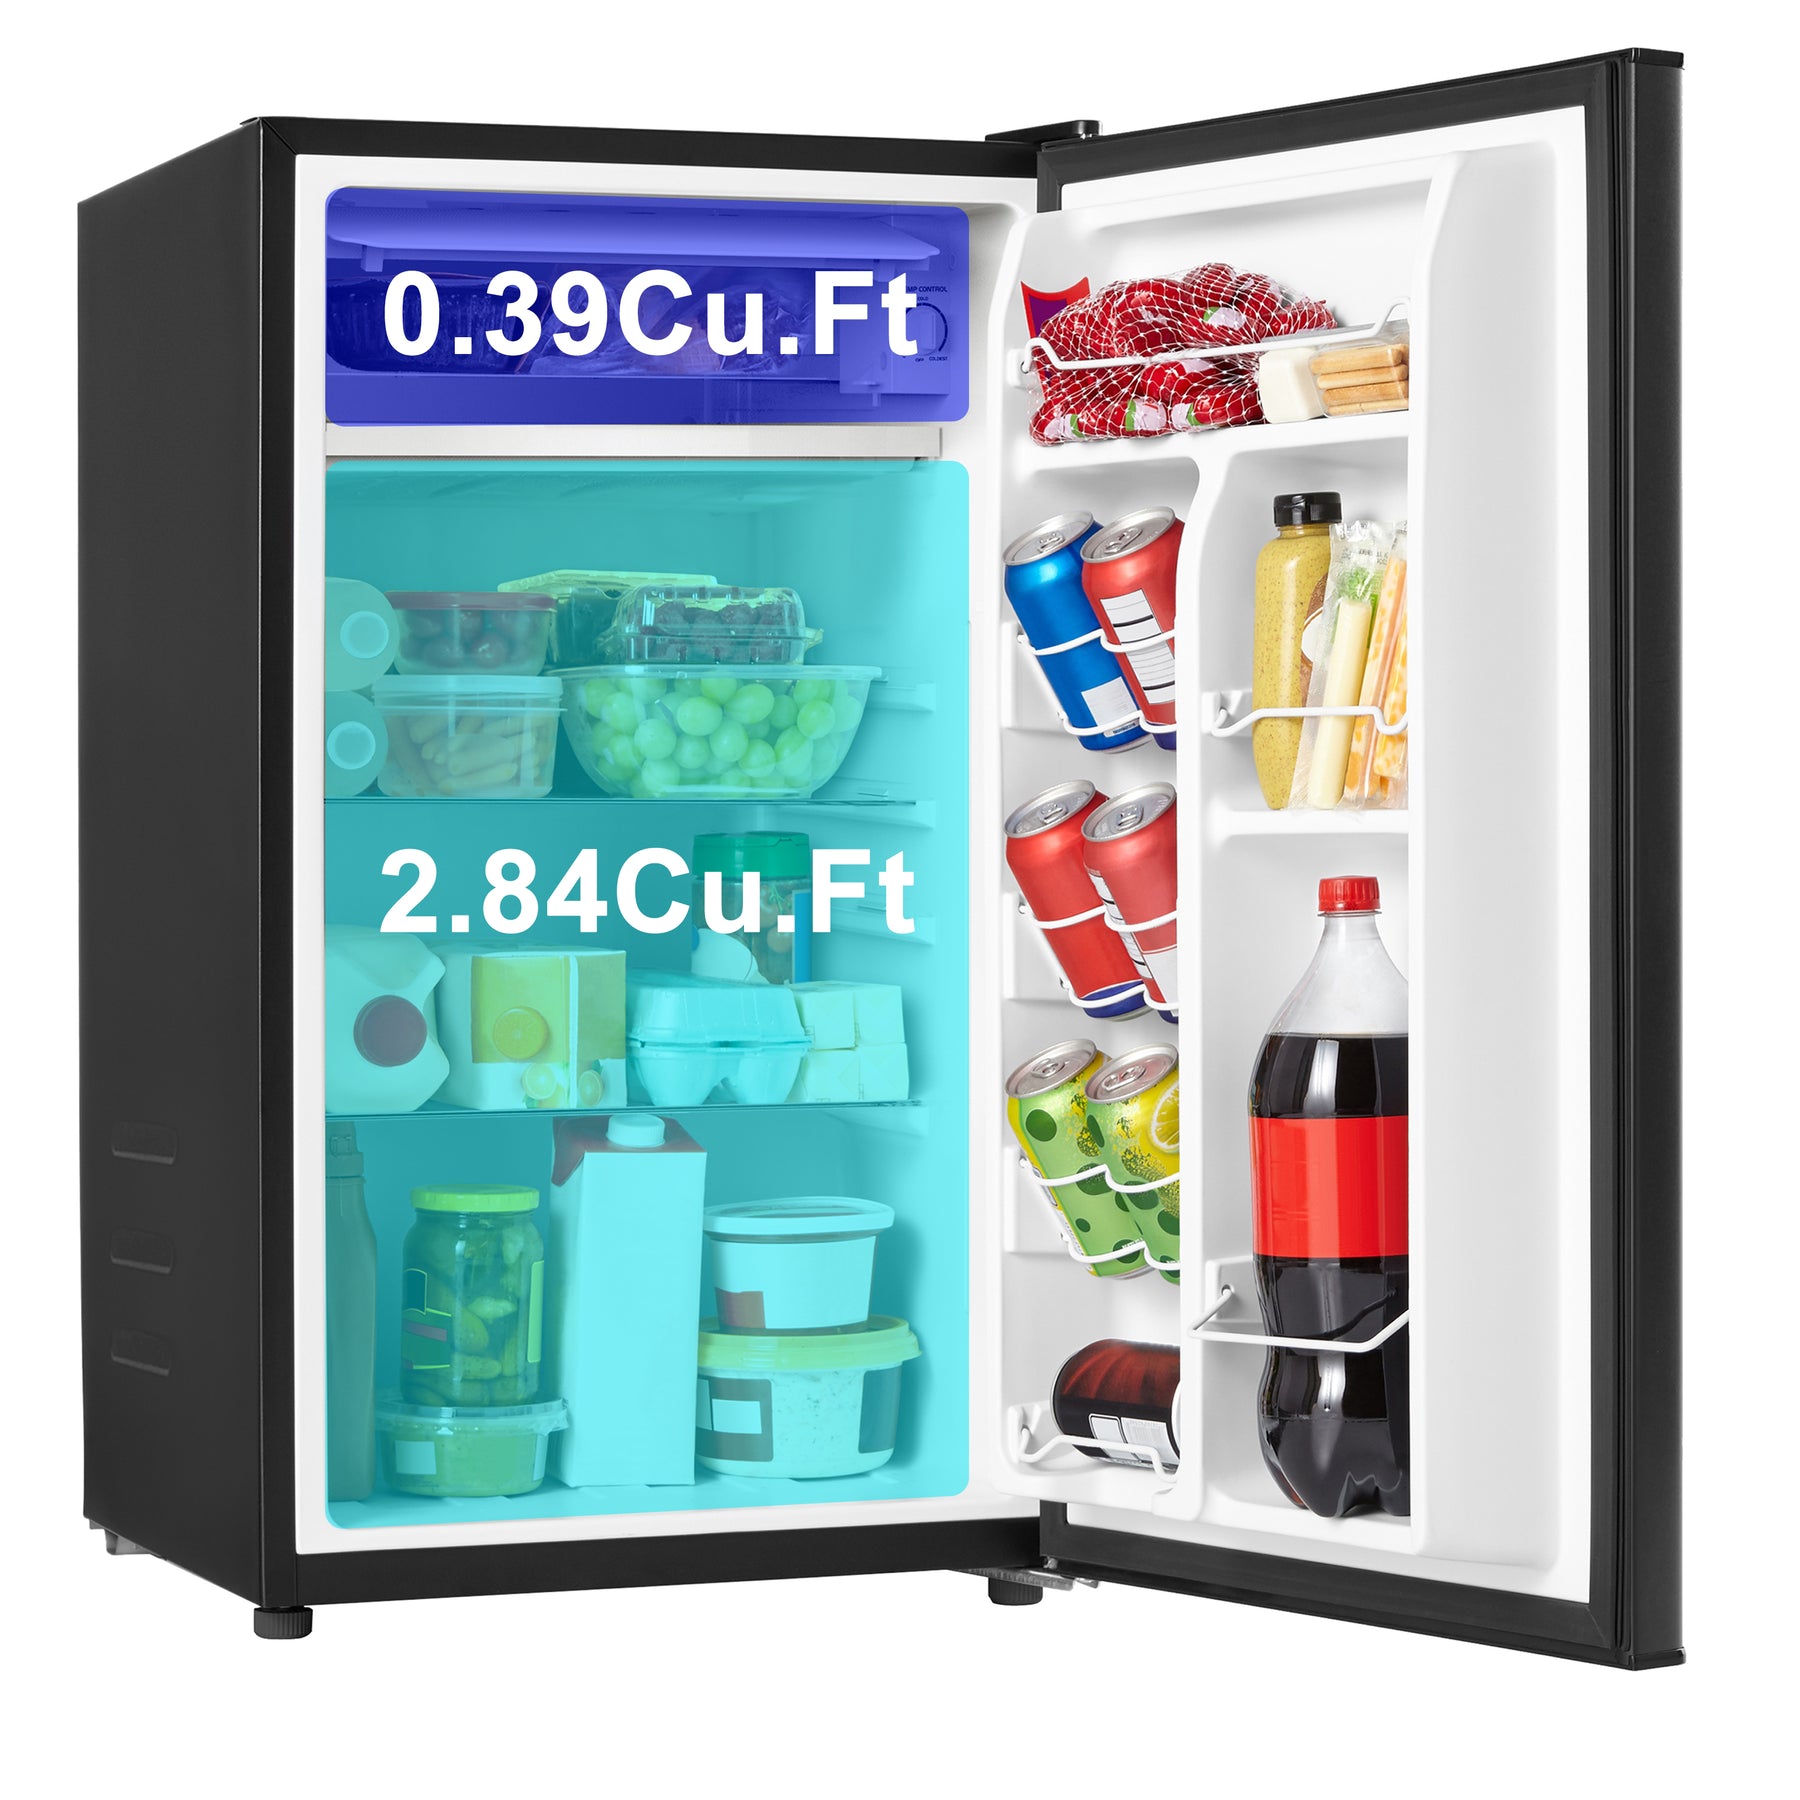 Galanz Mini Fridge Freezer - 3.3 Cu Ft